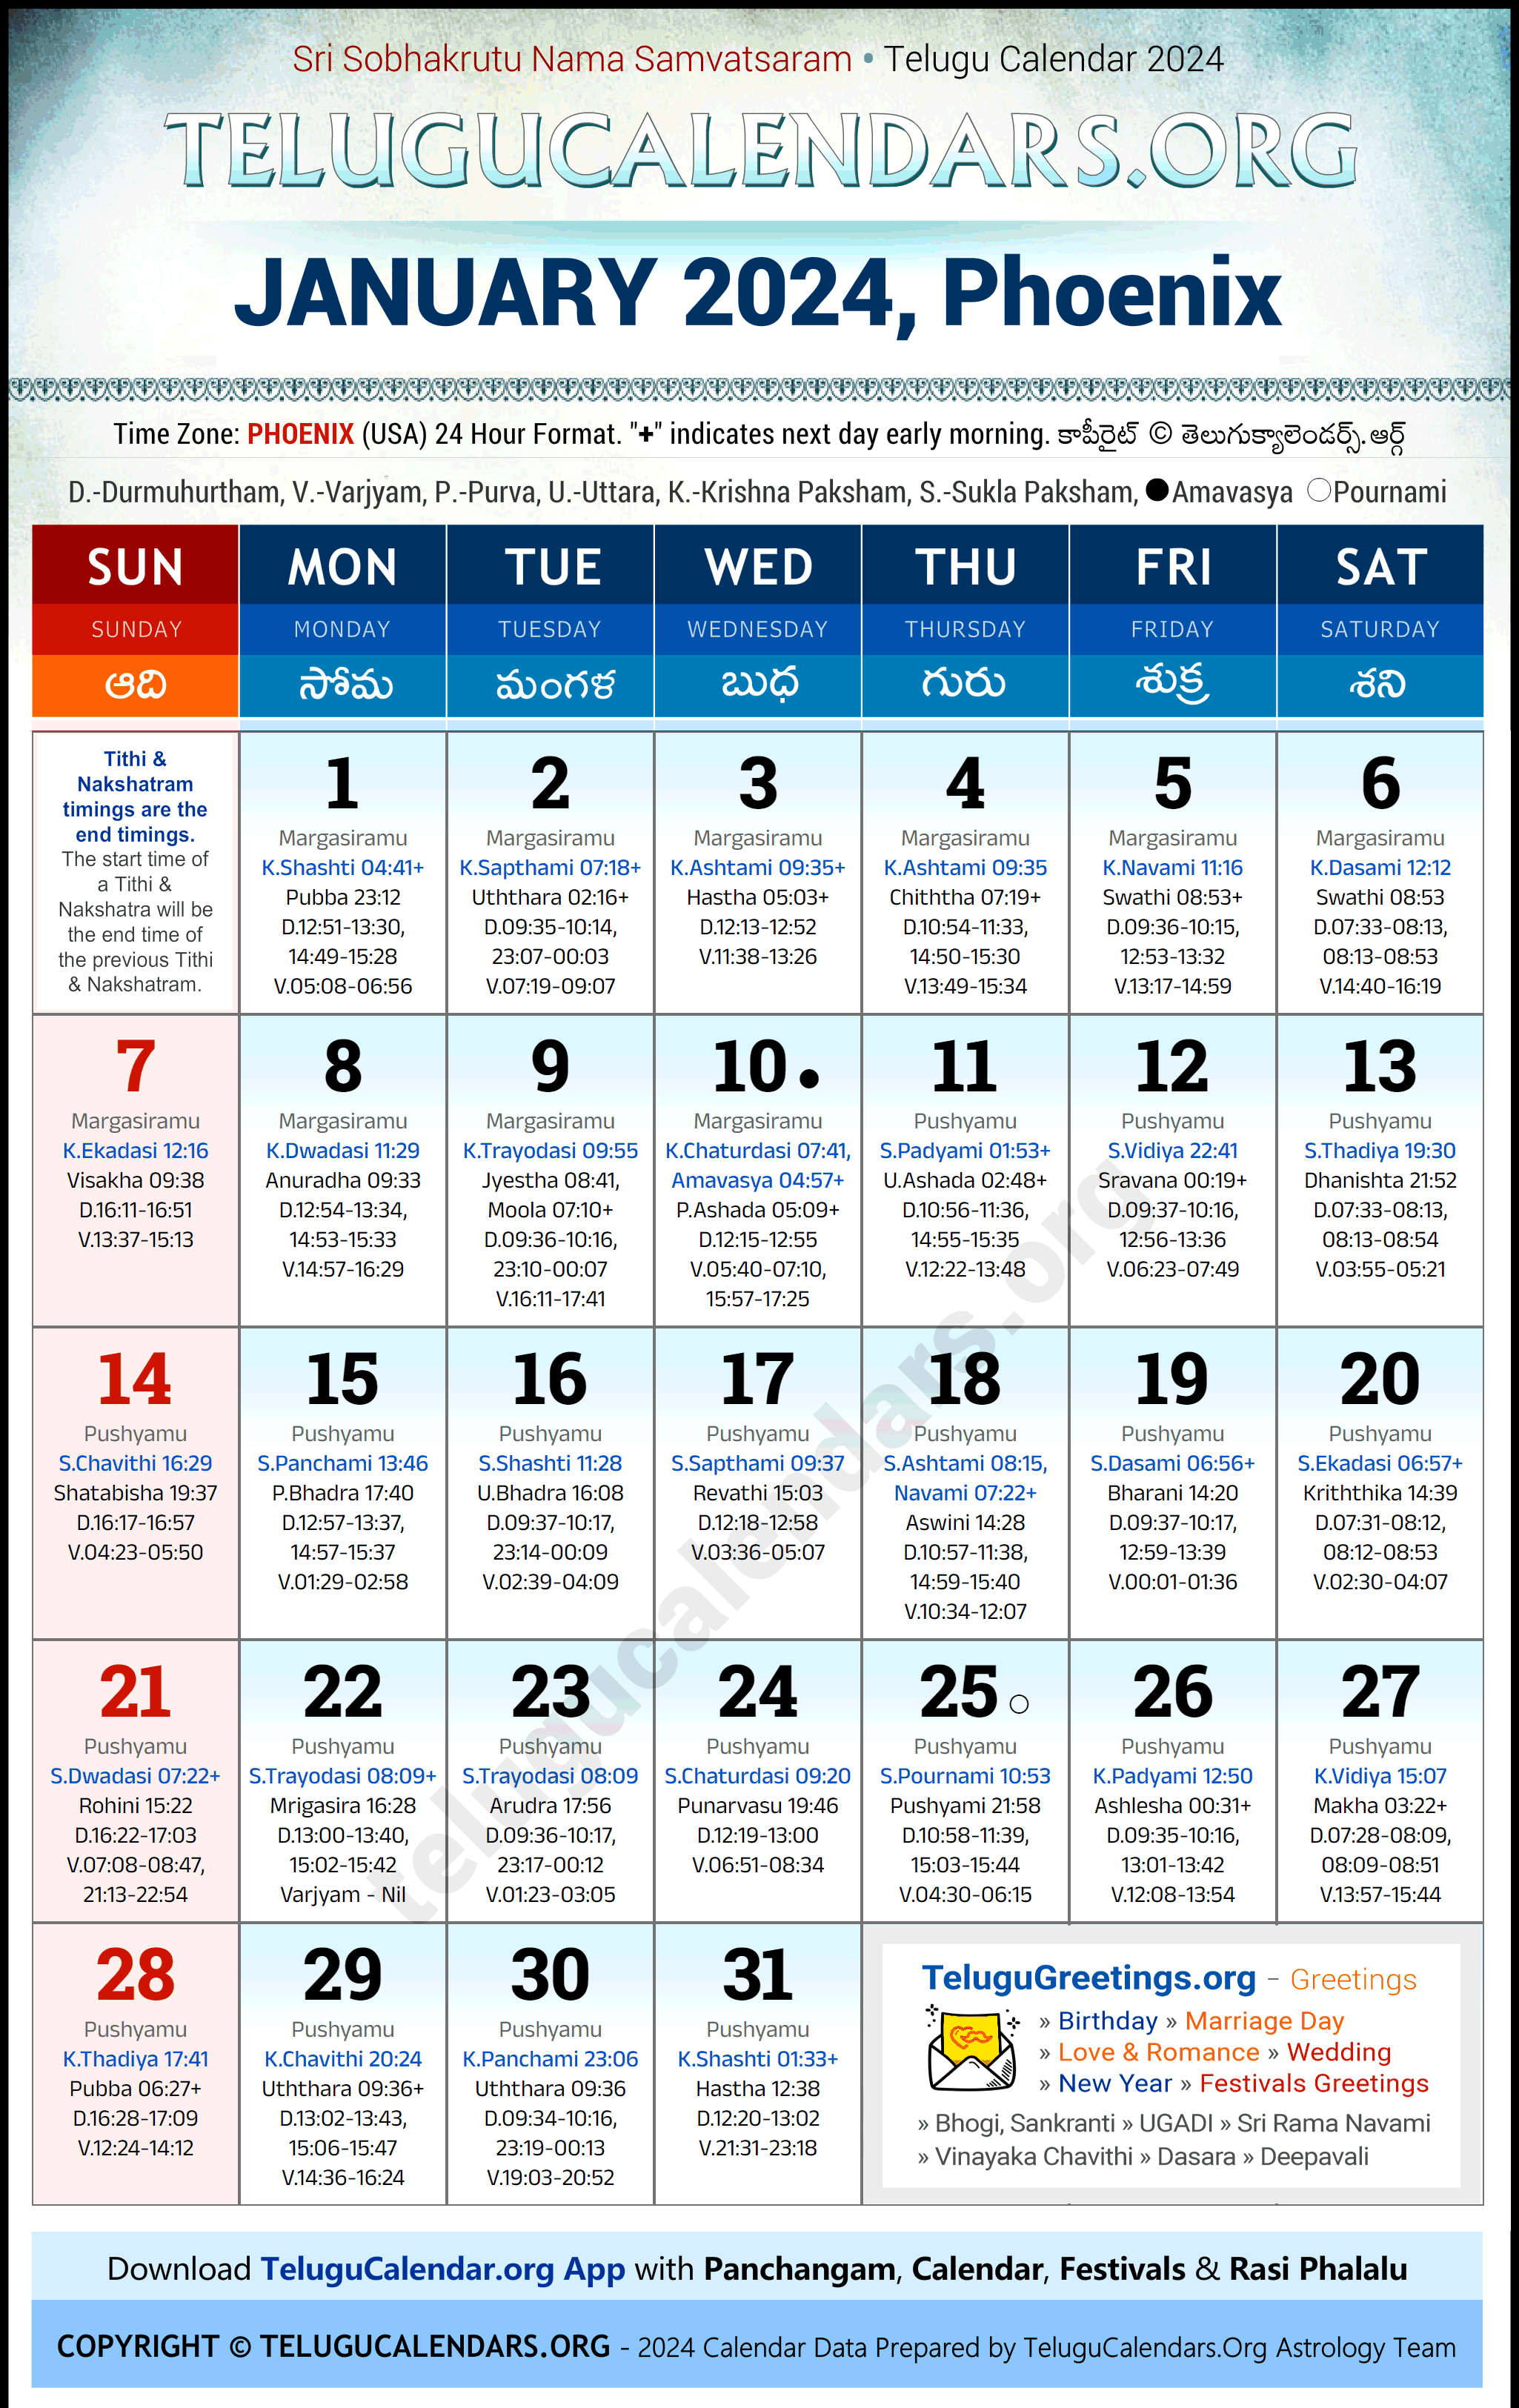 Telugu Calendar 2024 January Festivals for Phoenix